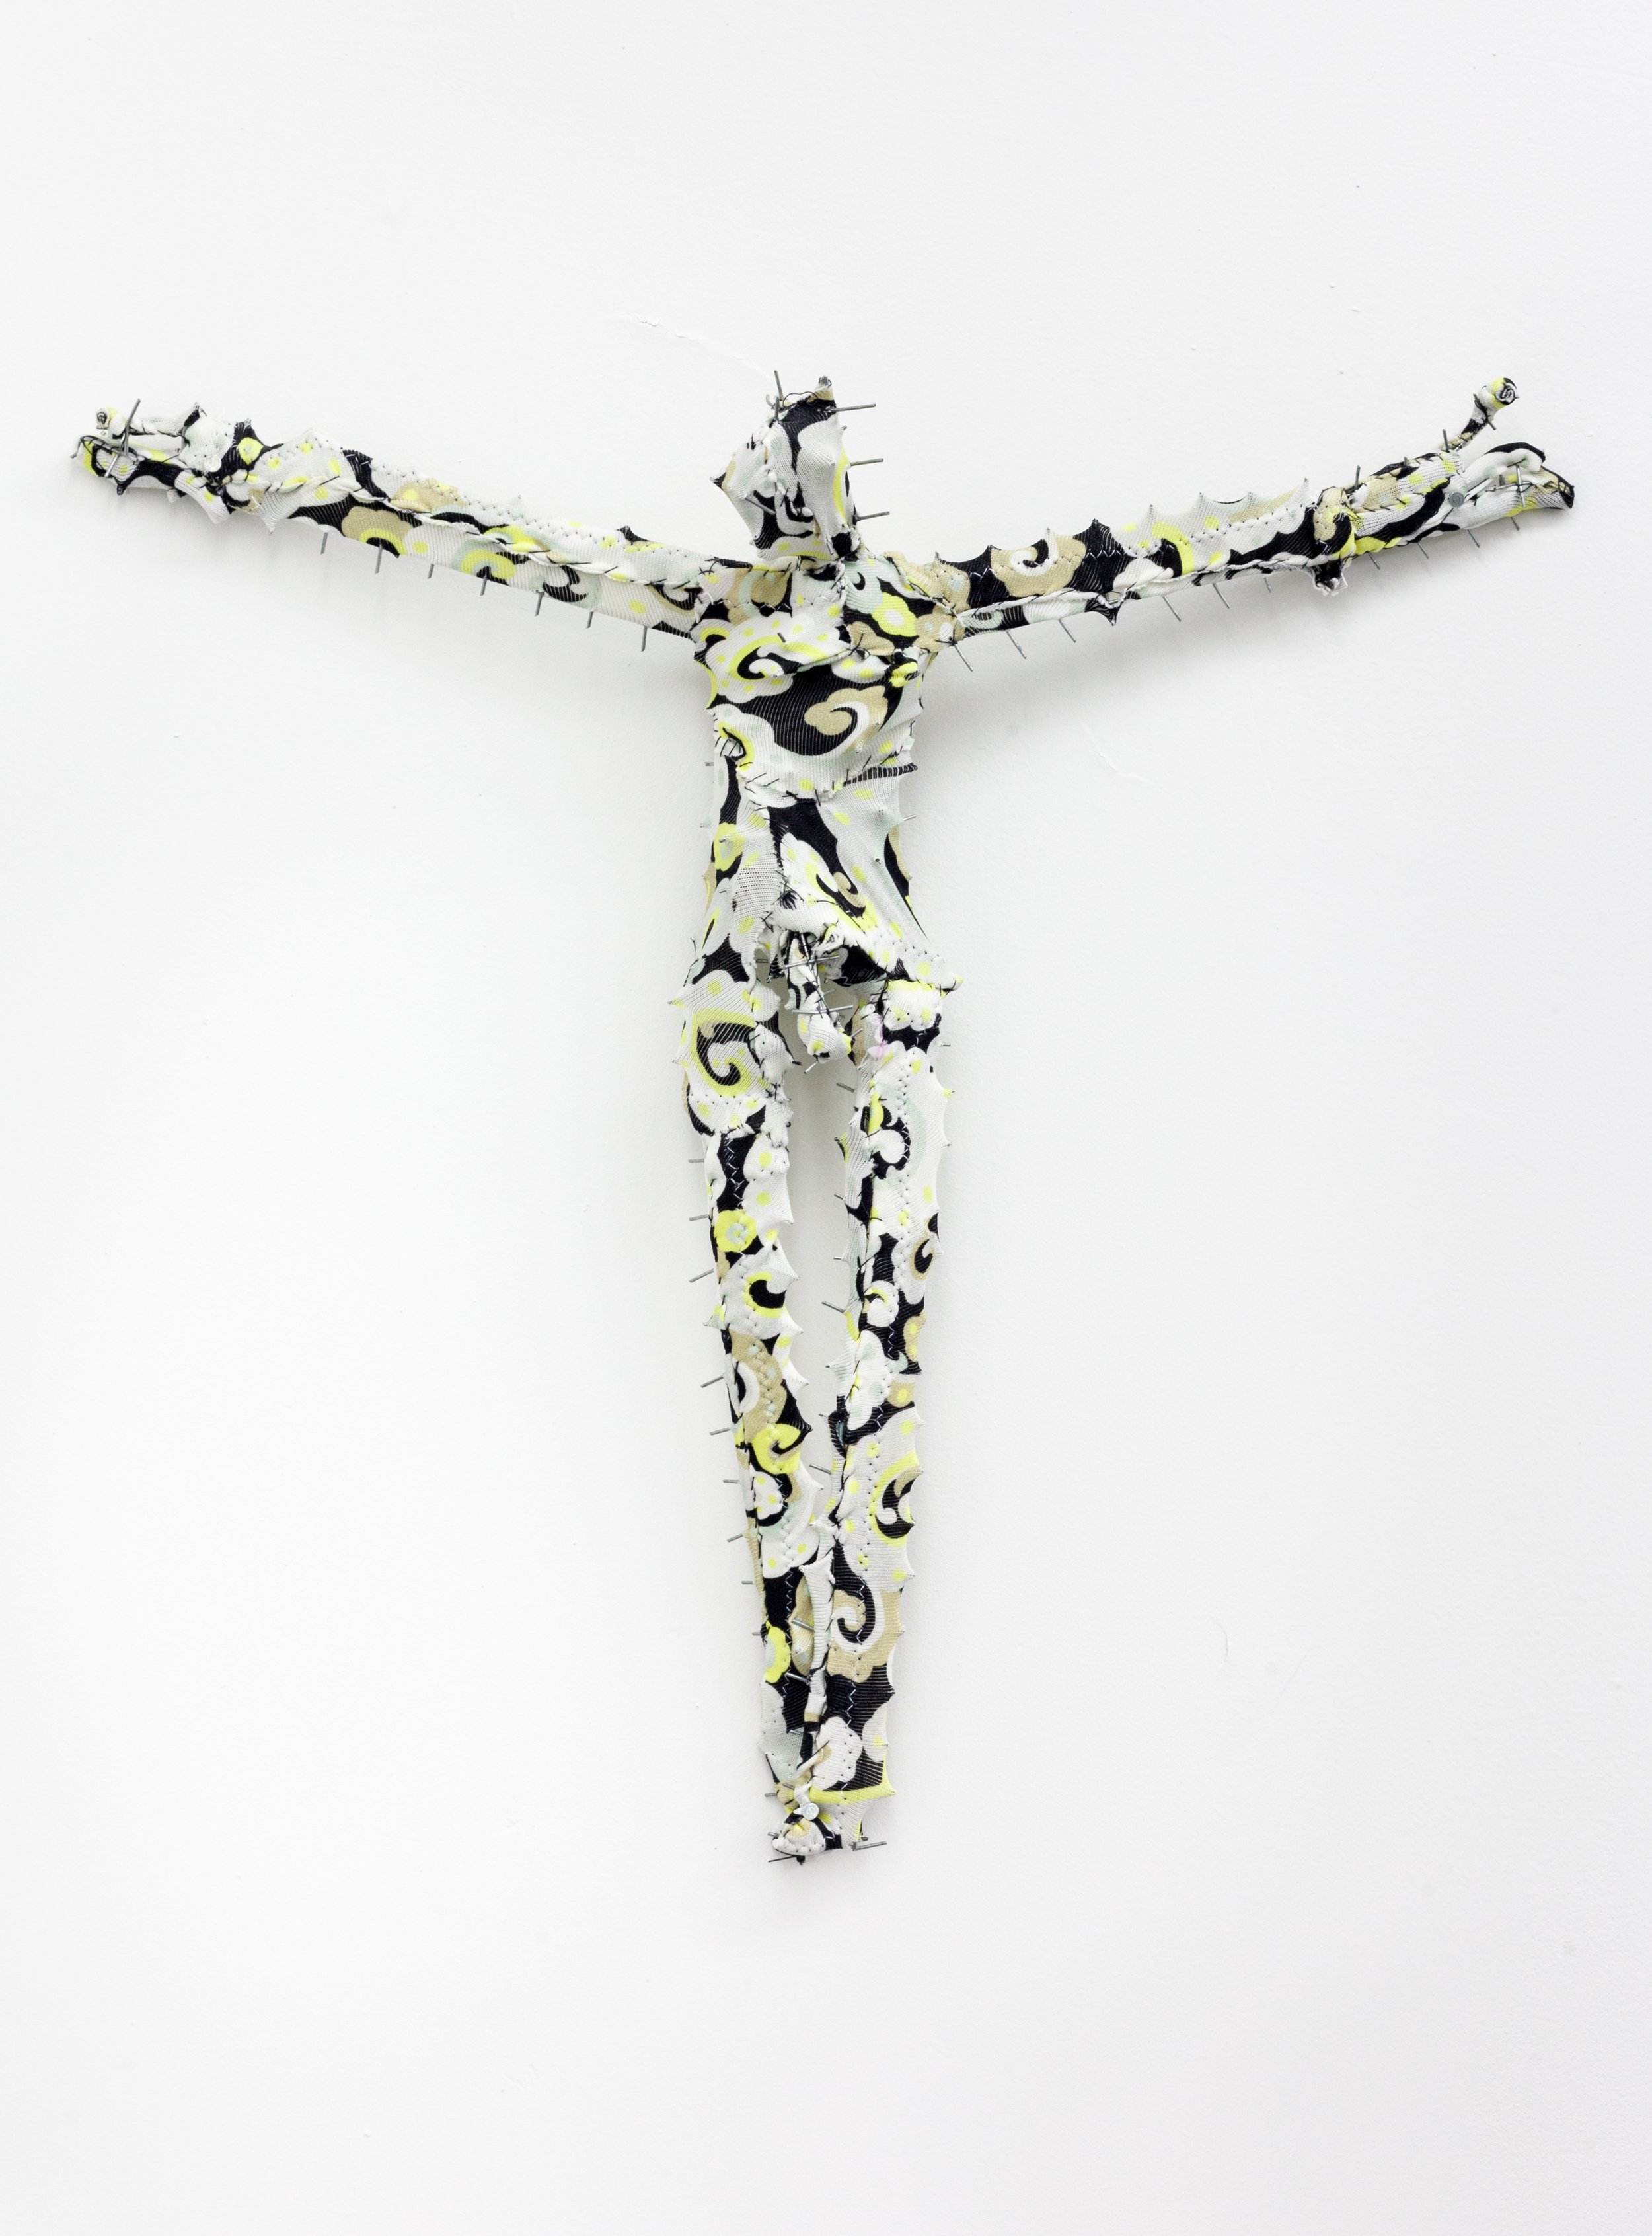   Bikini Crucifixion no. 12 , 2020. Old bathingsuits, steel, cotton thread. 14 x 14 x 3 inches. 